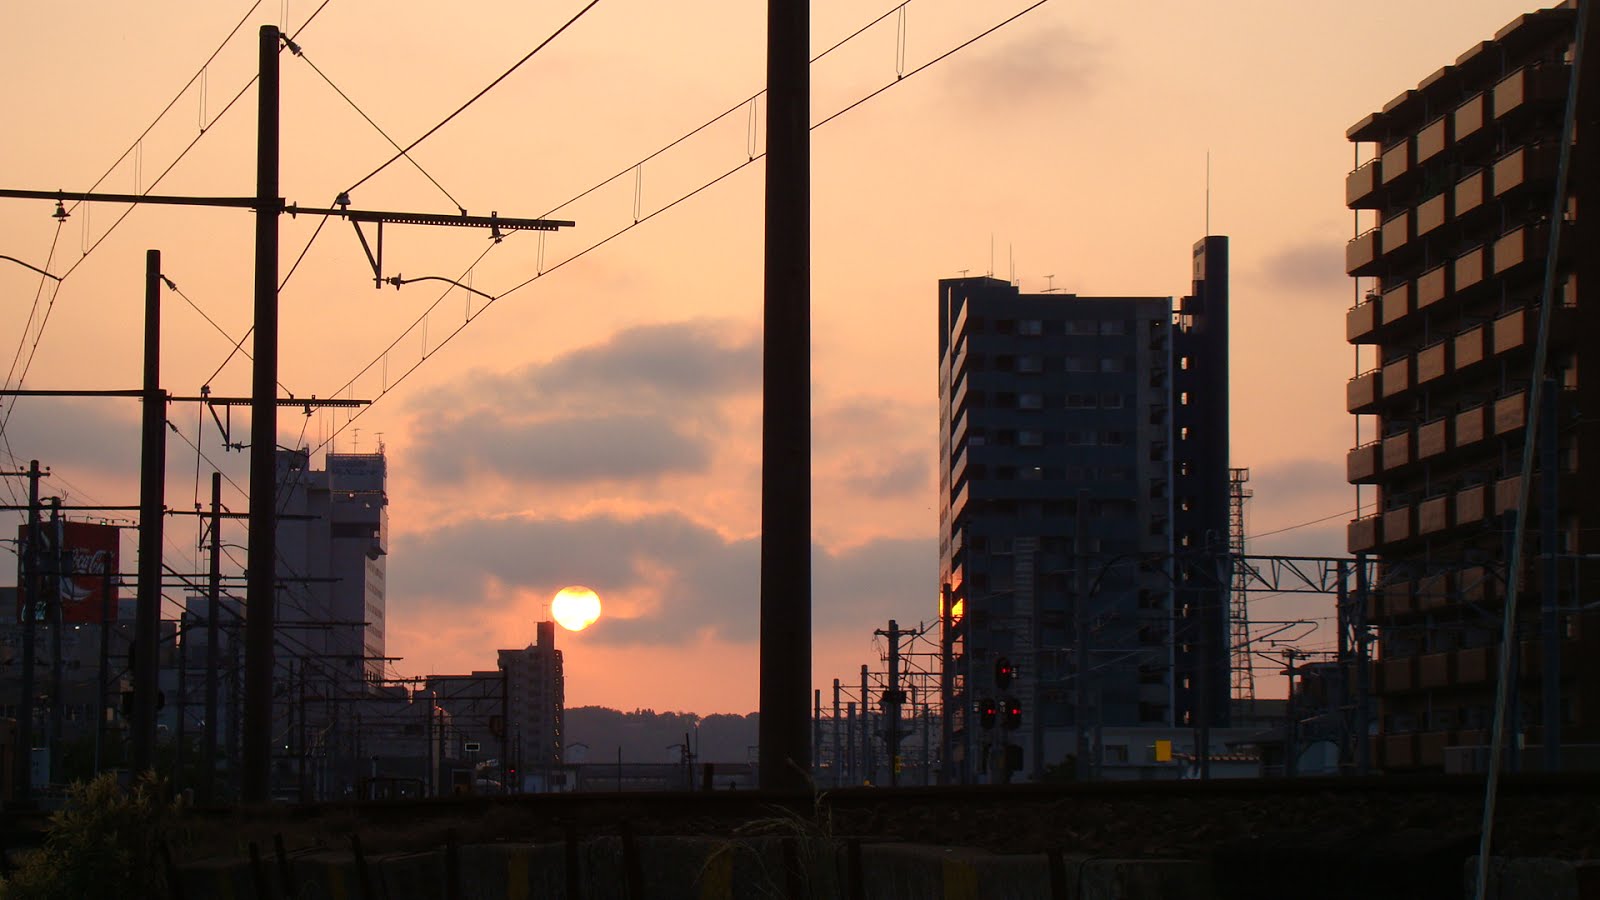 Toyama at sunset